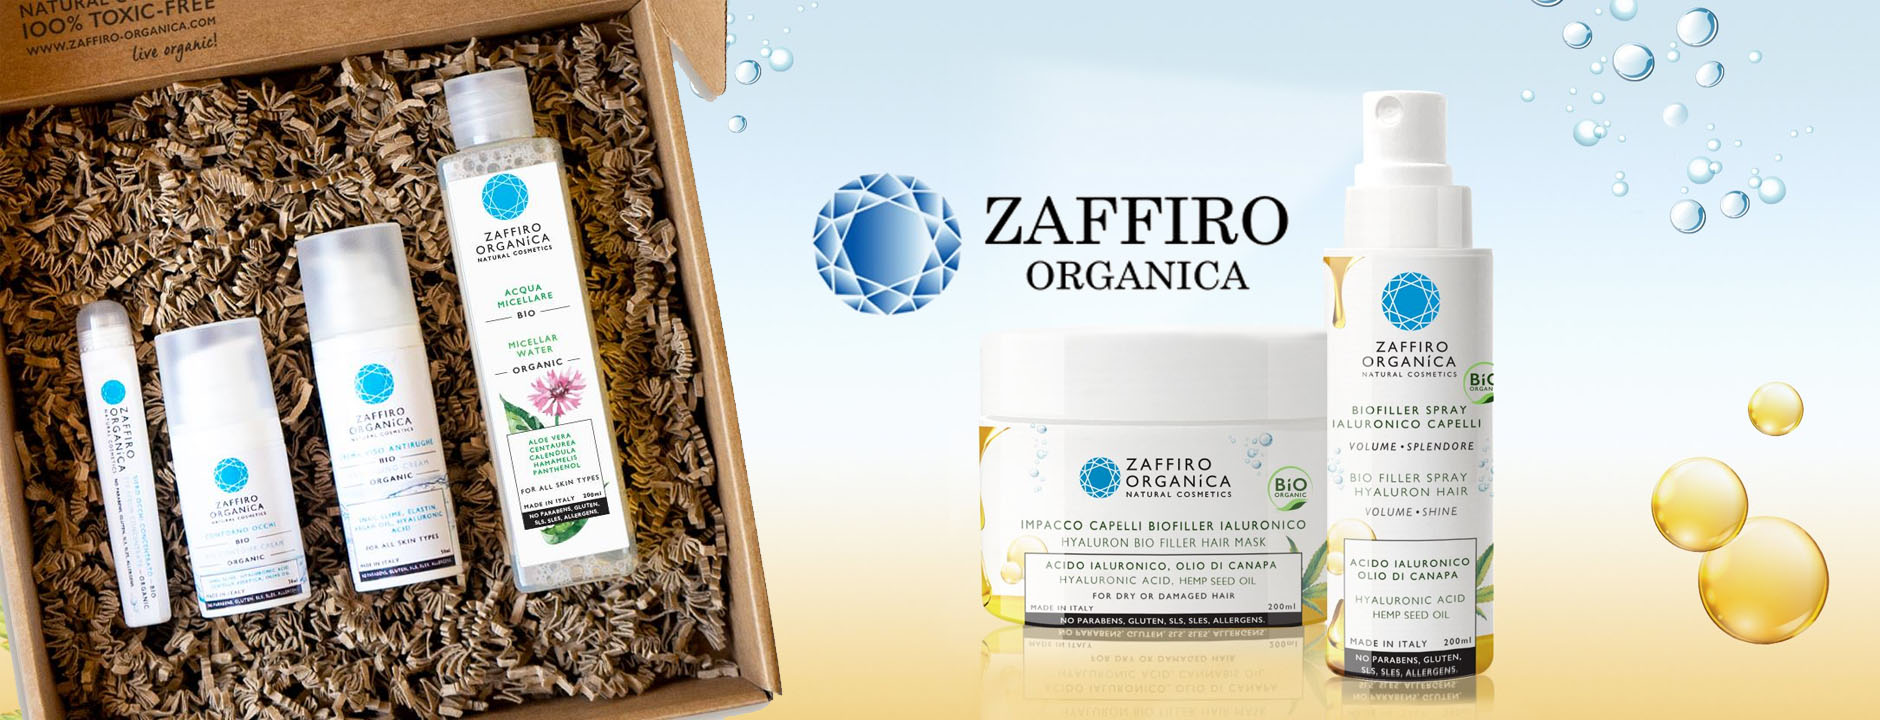 Zaffiro Organica